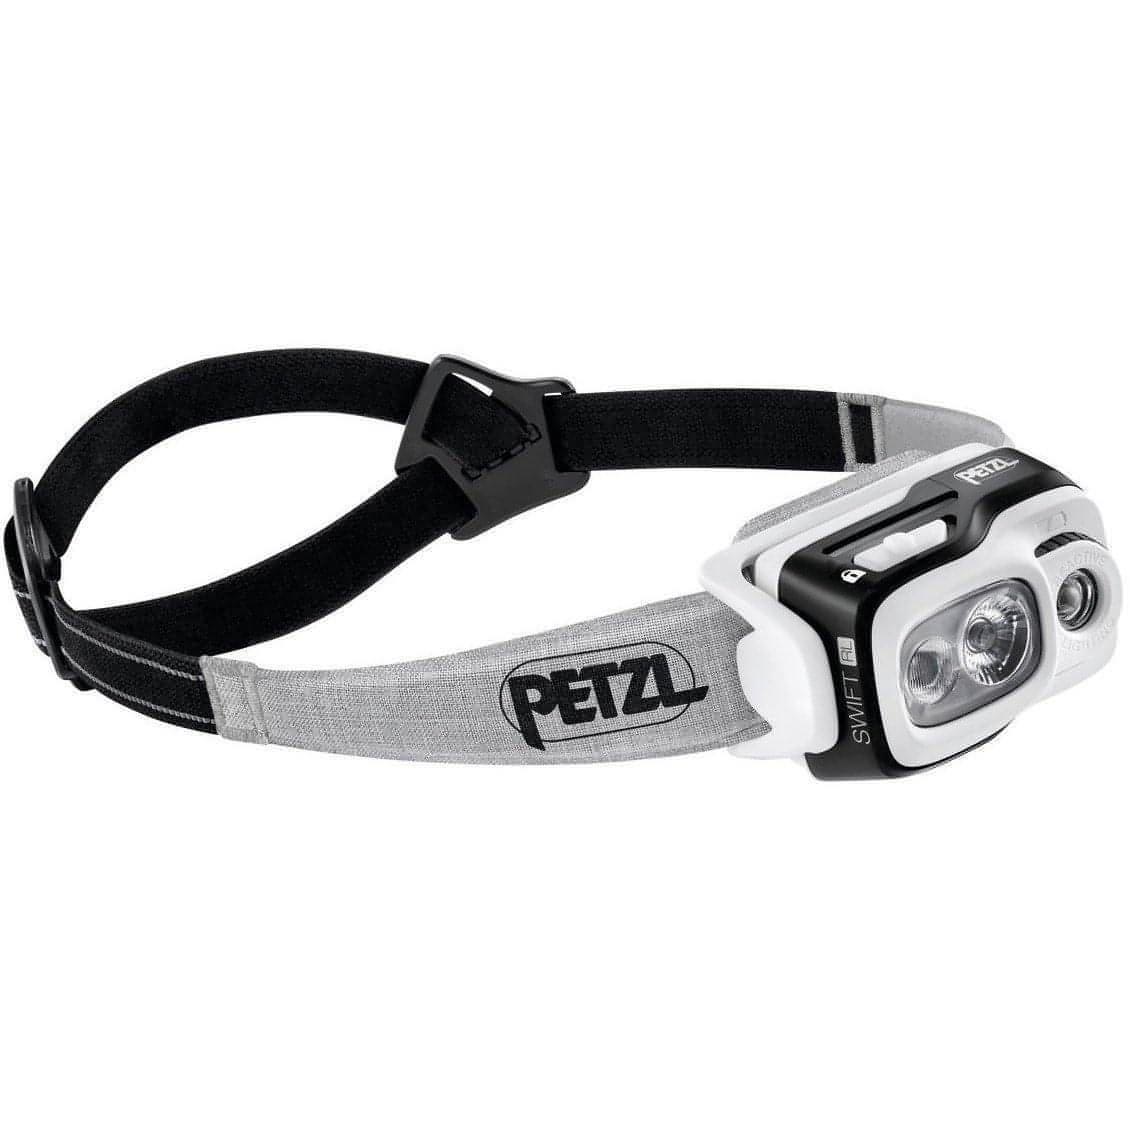 Petzl Swift RL 900 Lumen Head Torch - Black 3342540828506 - Start Fitness